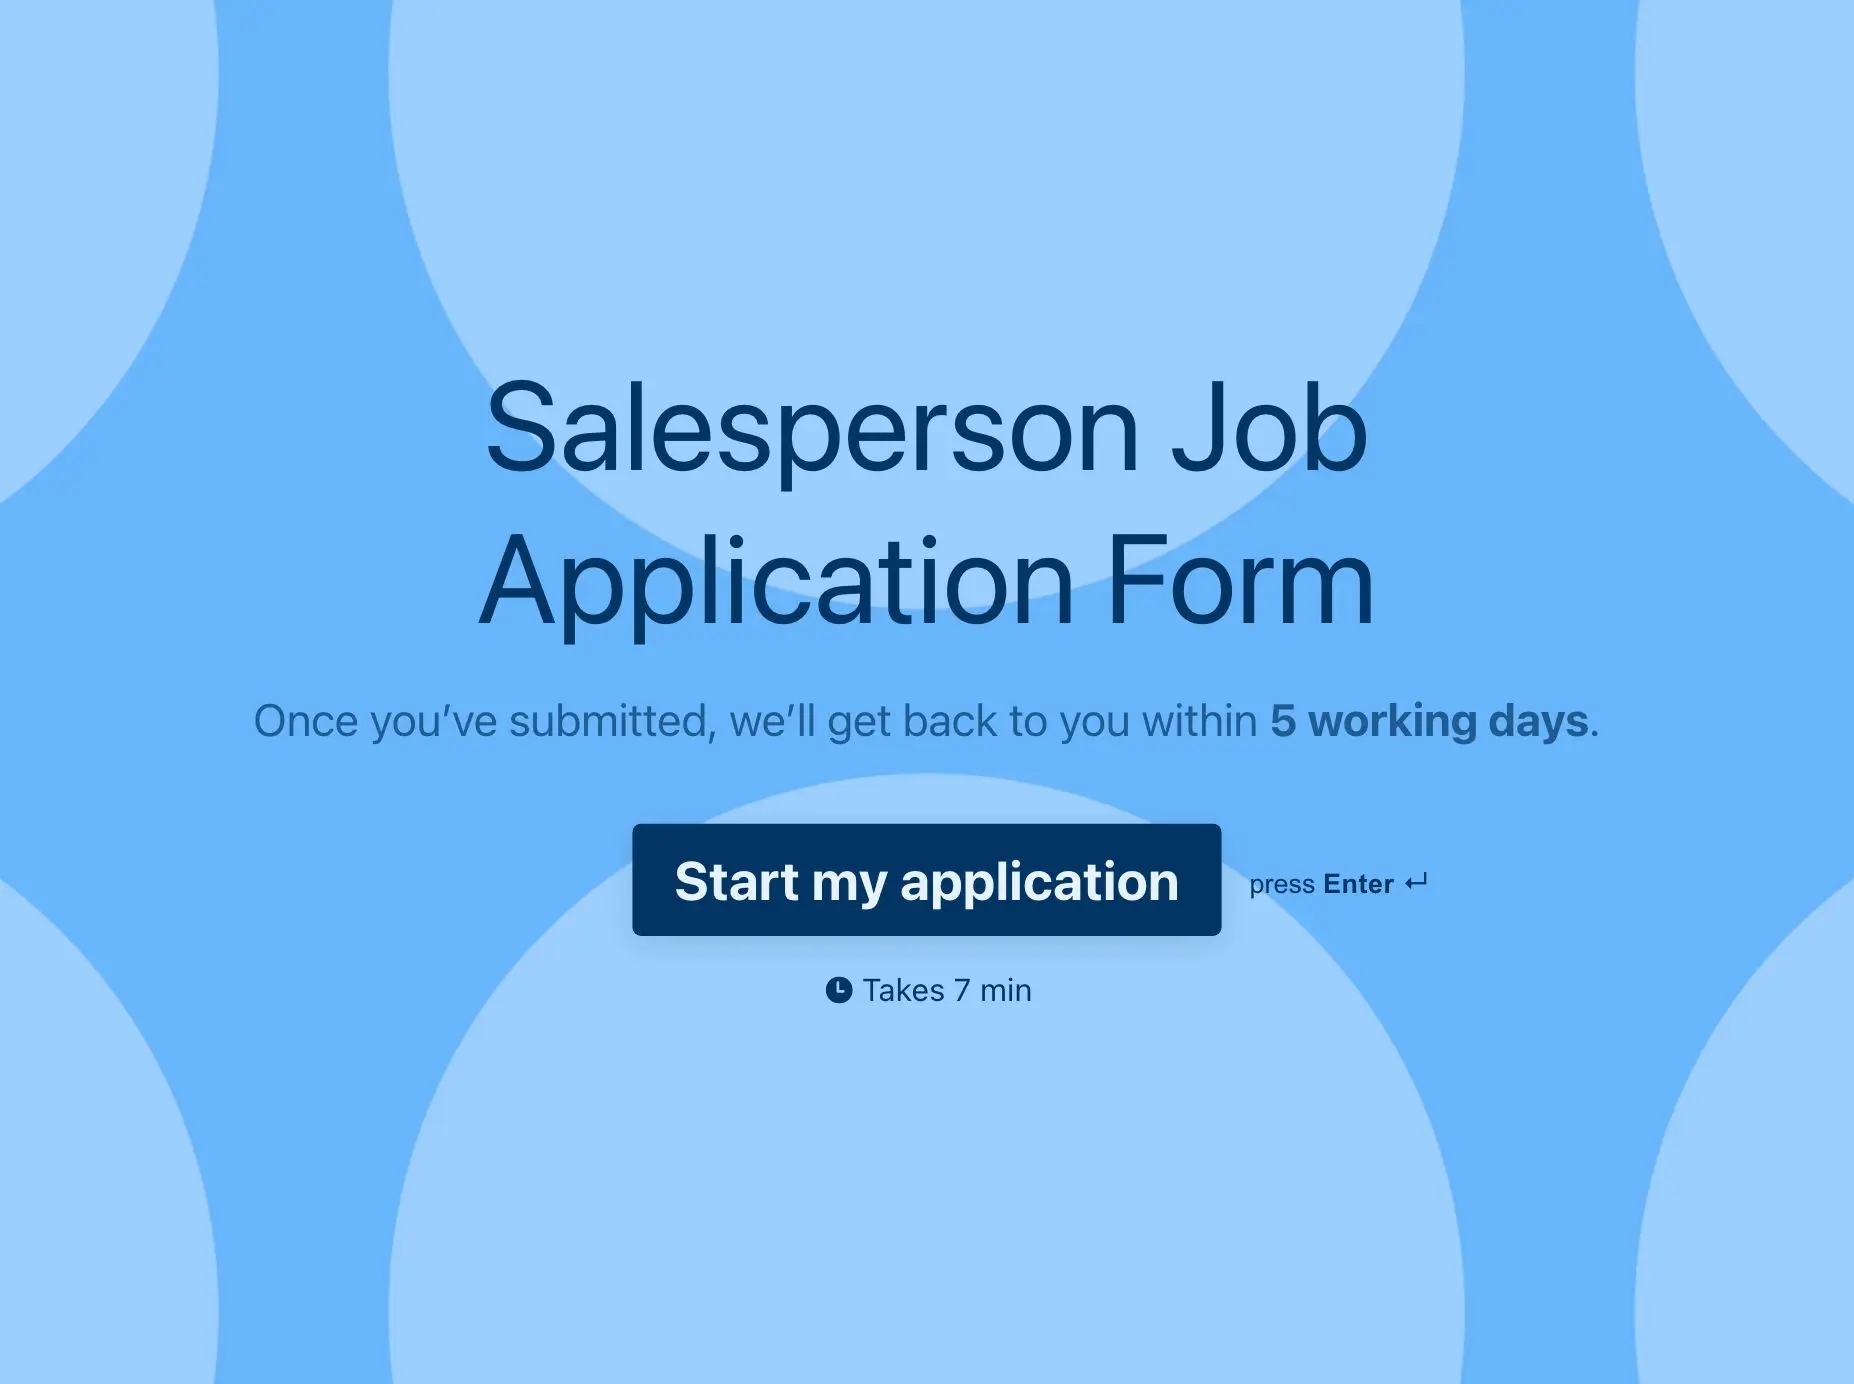 Salesperson Job Application Form Template 8664